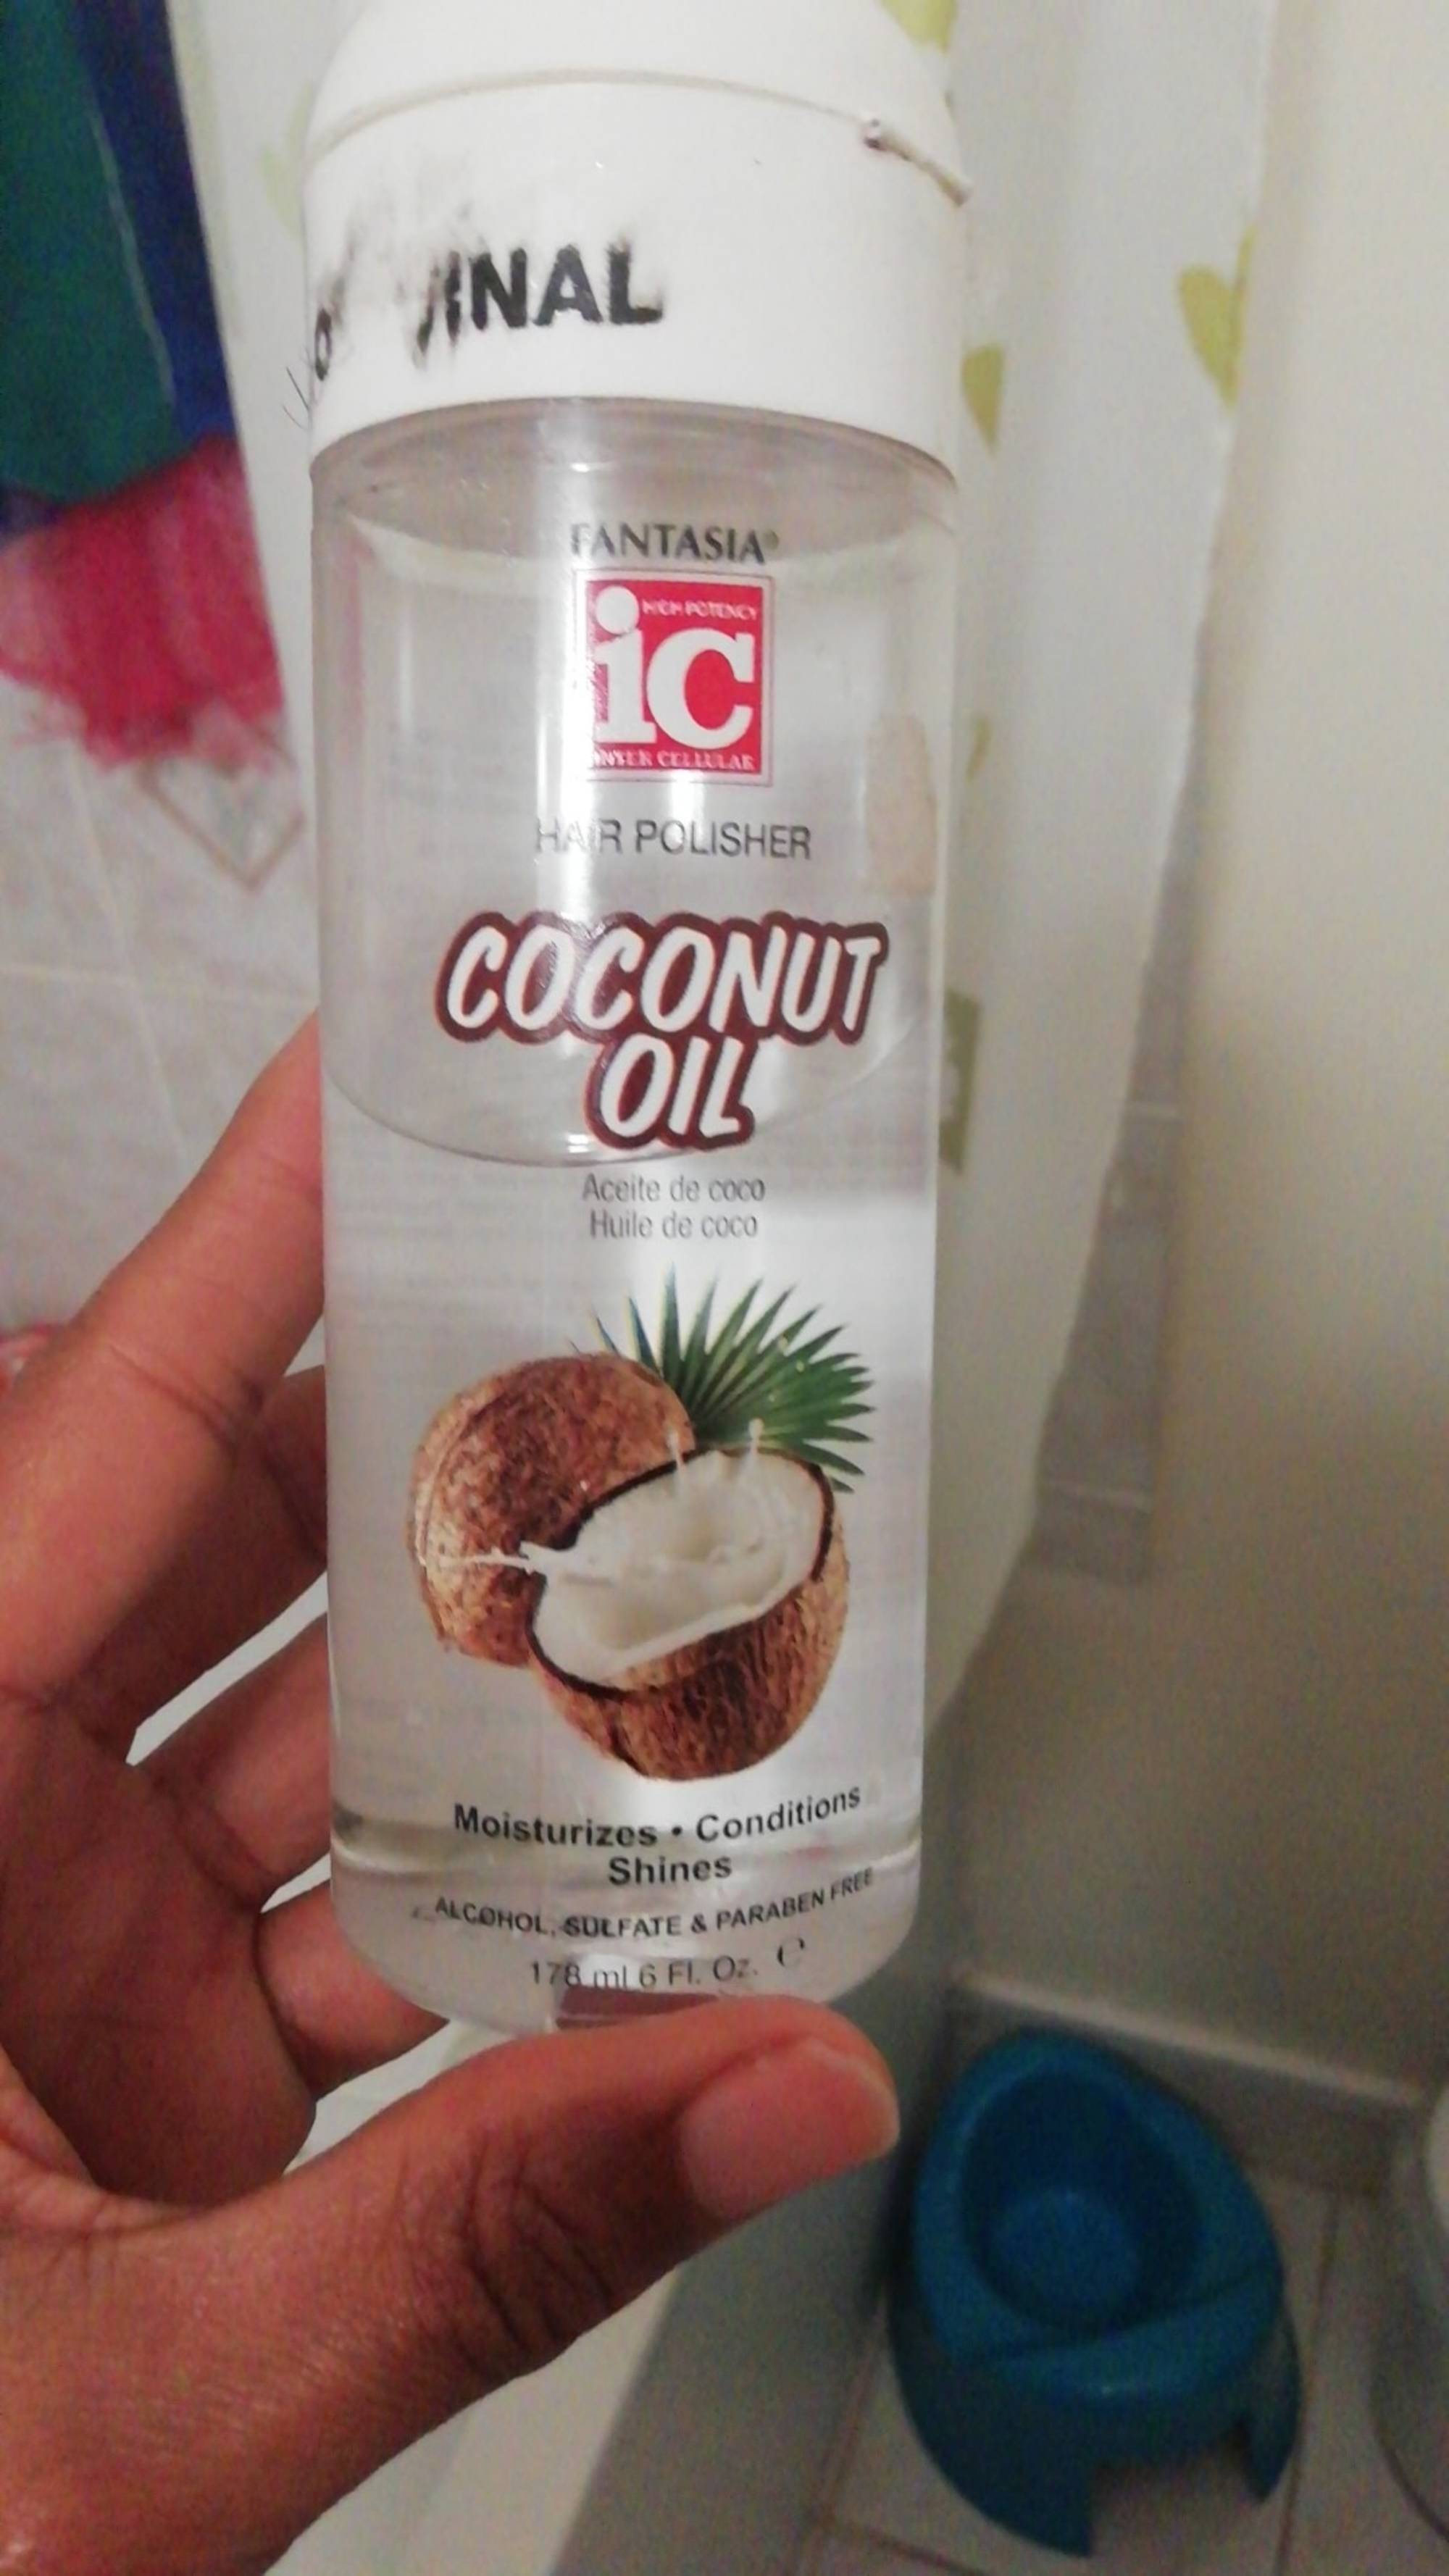 IC FANTASIA -  Coconut oil - Hair polisher